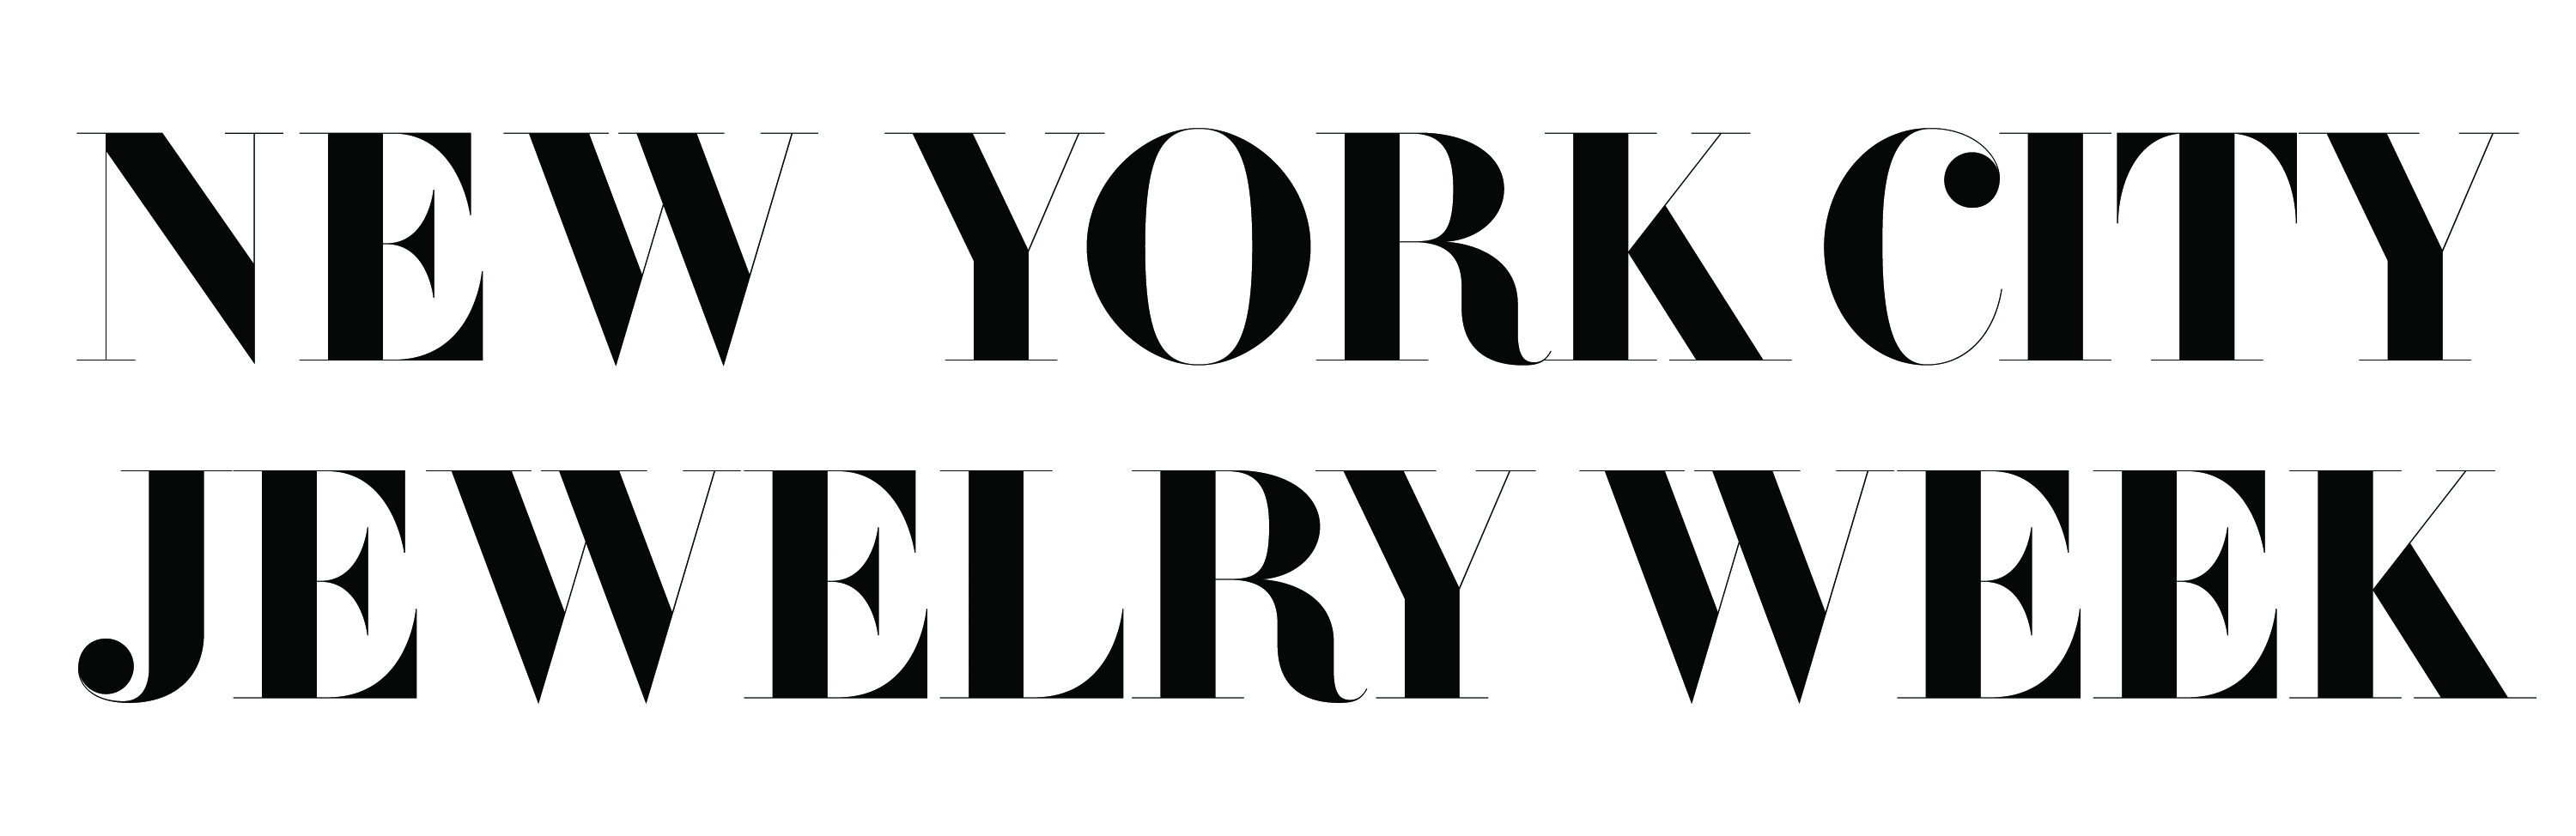 New York City Jewelry Week logo